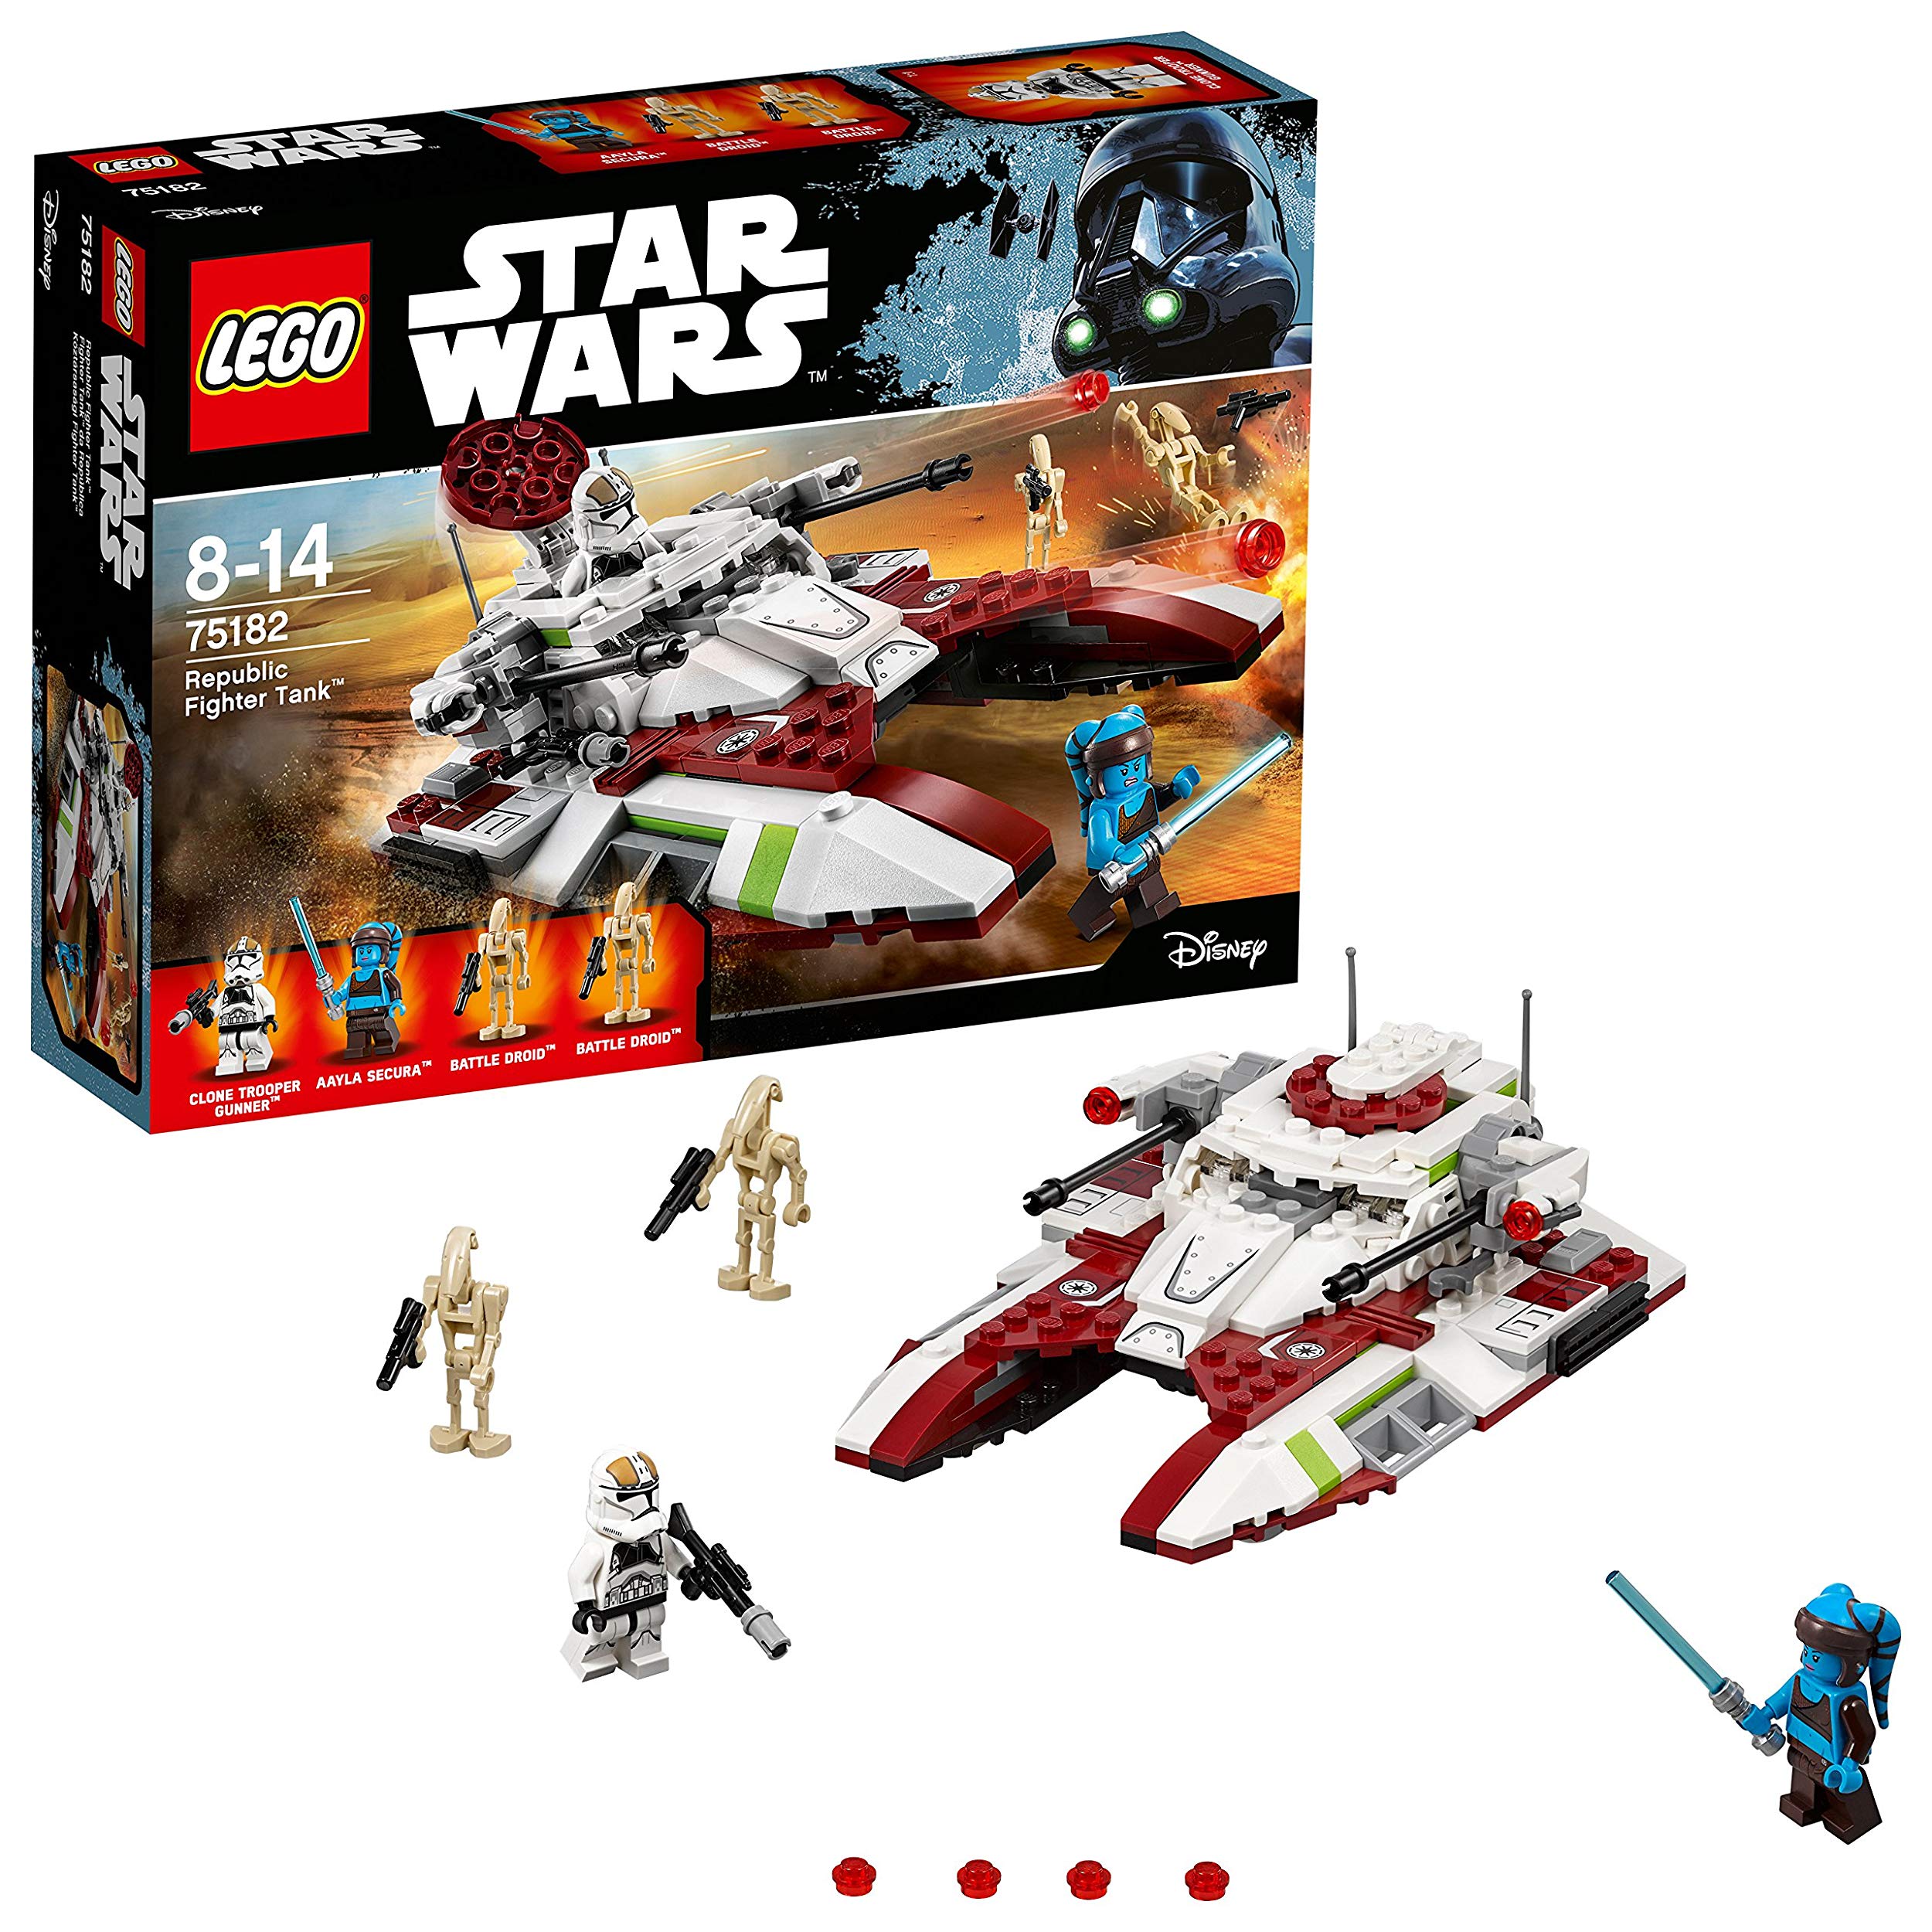 Lego Star Wars Star Wars Republic Fighter Tank Vehicle Toy